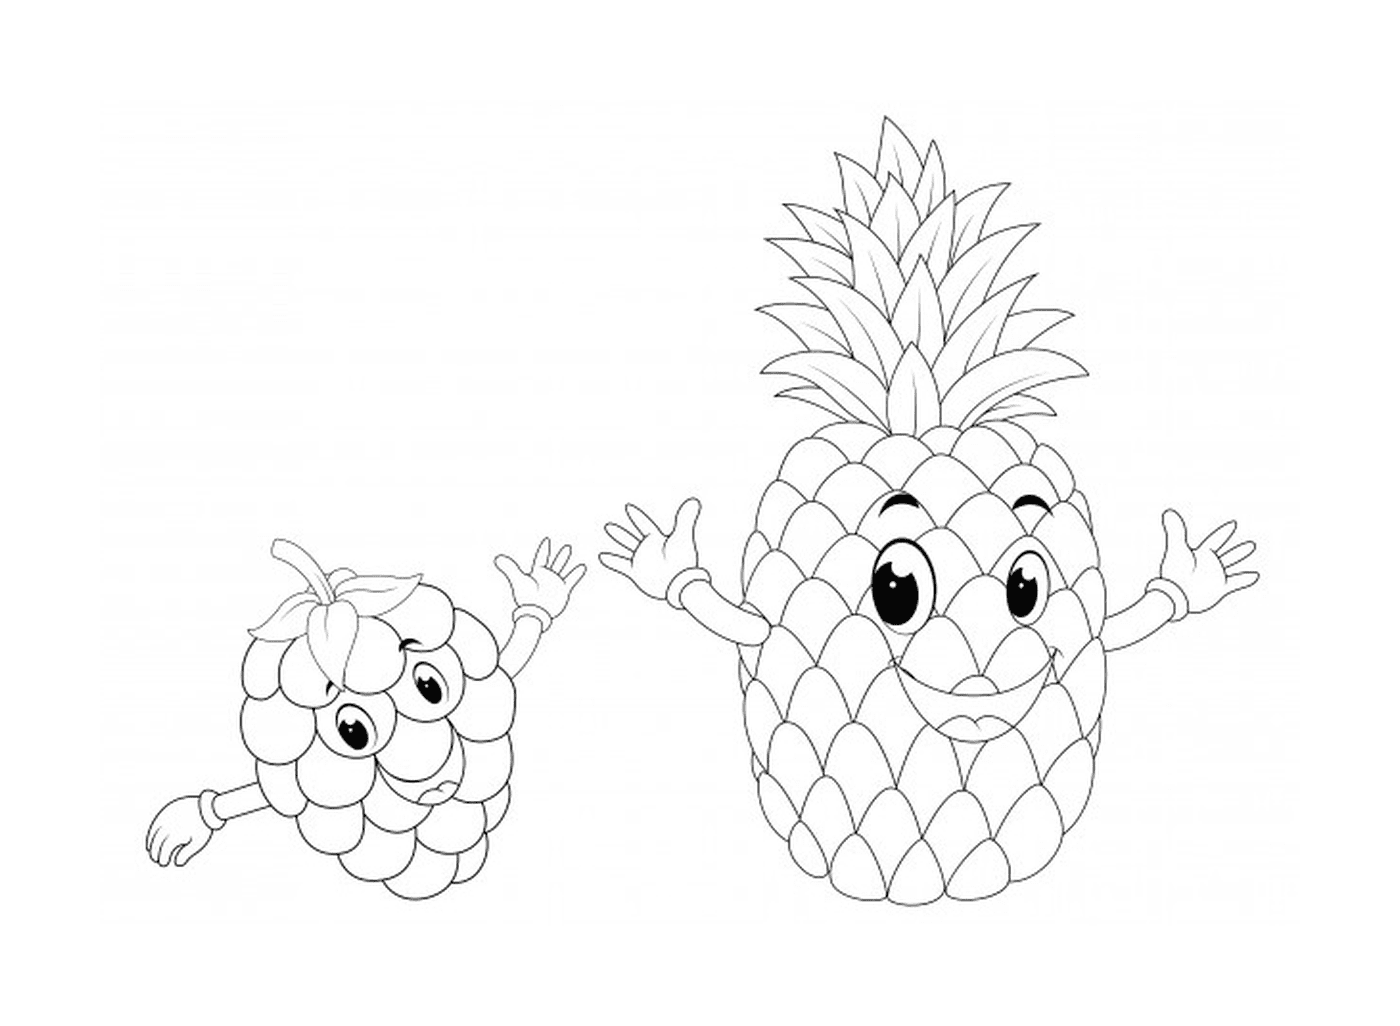  Pineapple and raspberry 